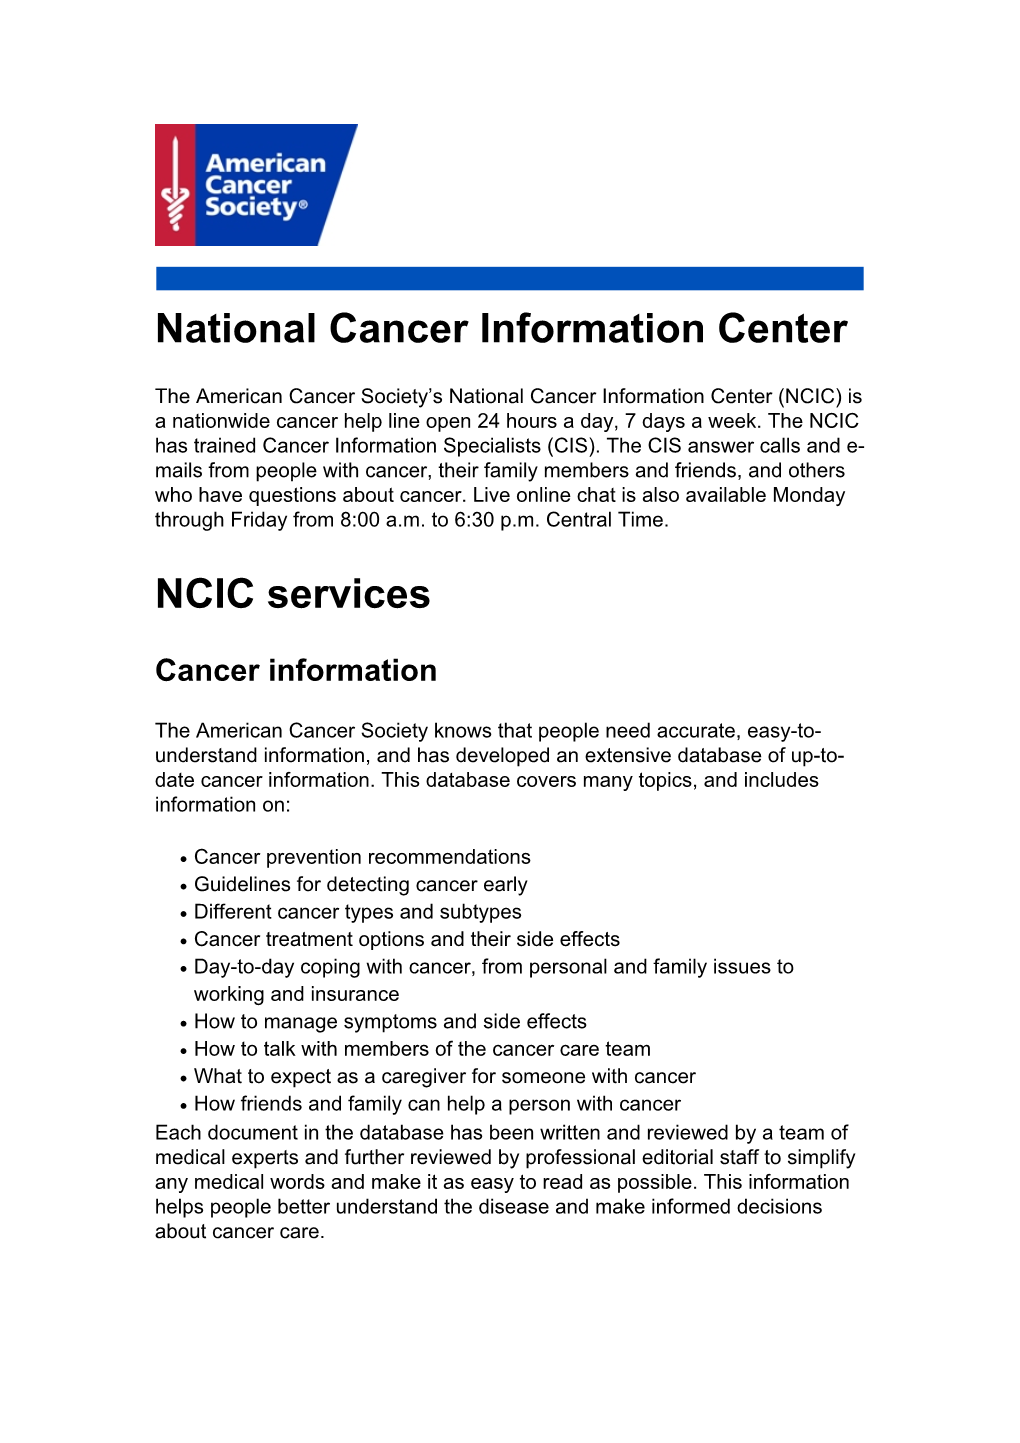 National Cancer Information Center NCIC Services